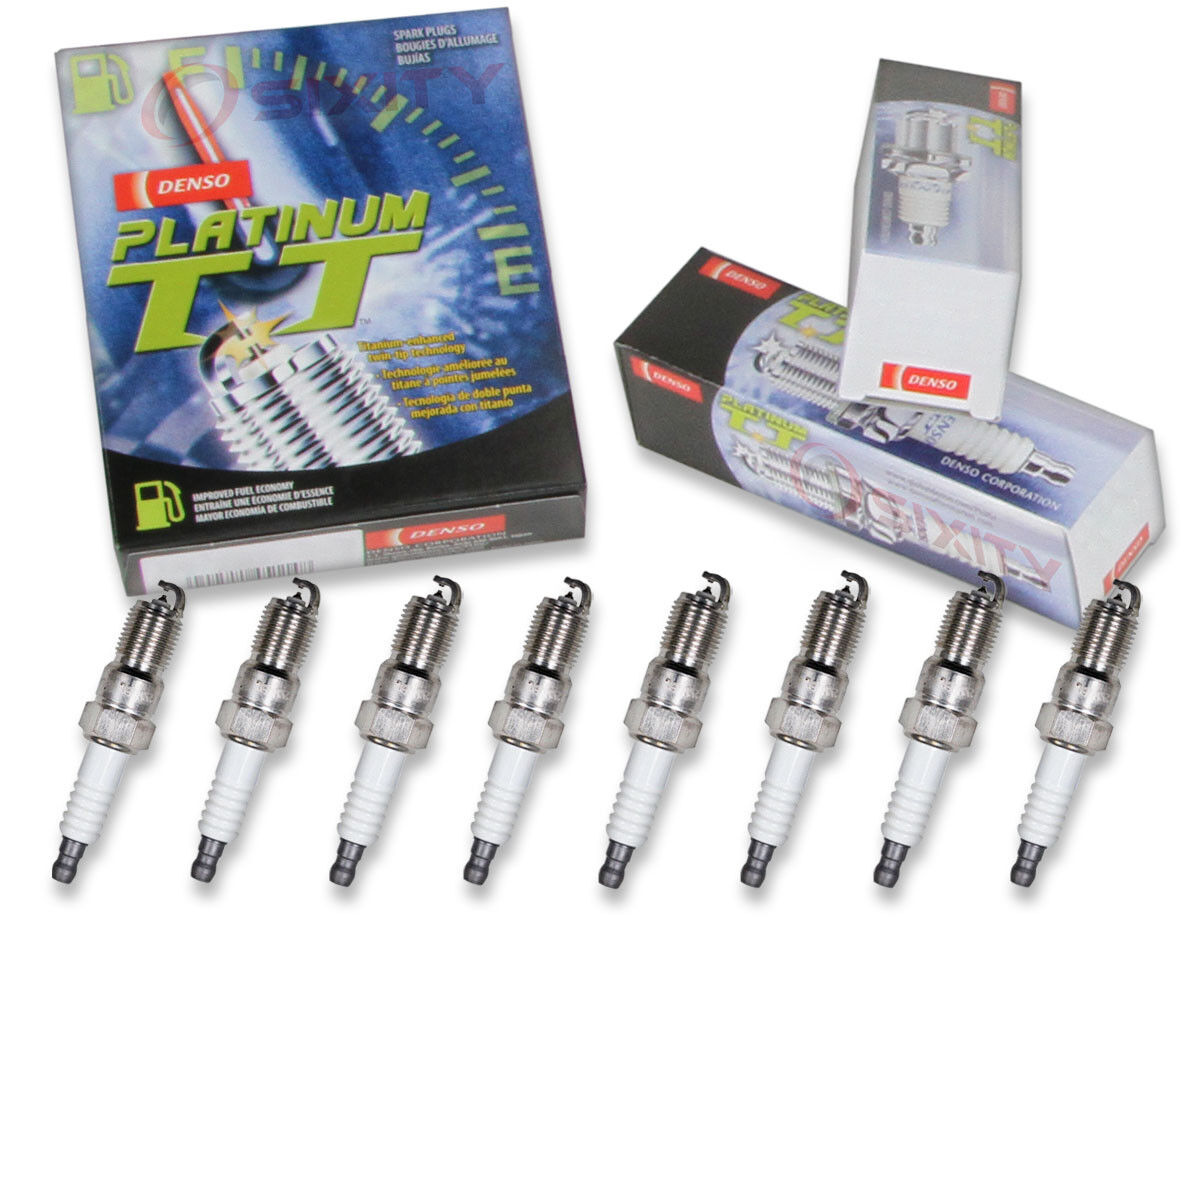 8 pc Denso Platinum TT Spark Plugs for 1994-2001 Ford Ranger 2.3L 2.5L L4 bz